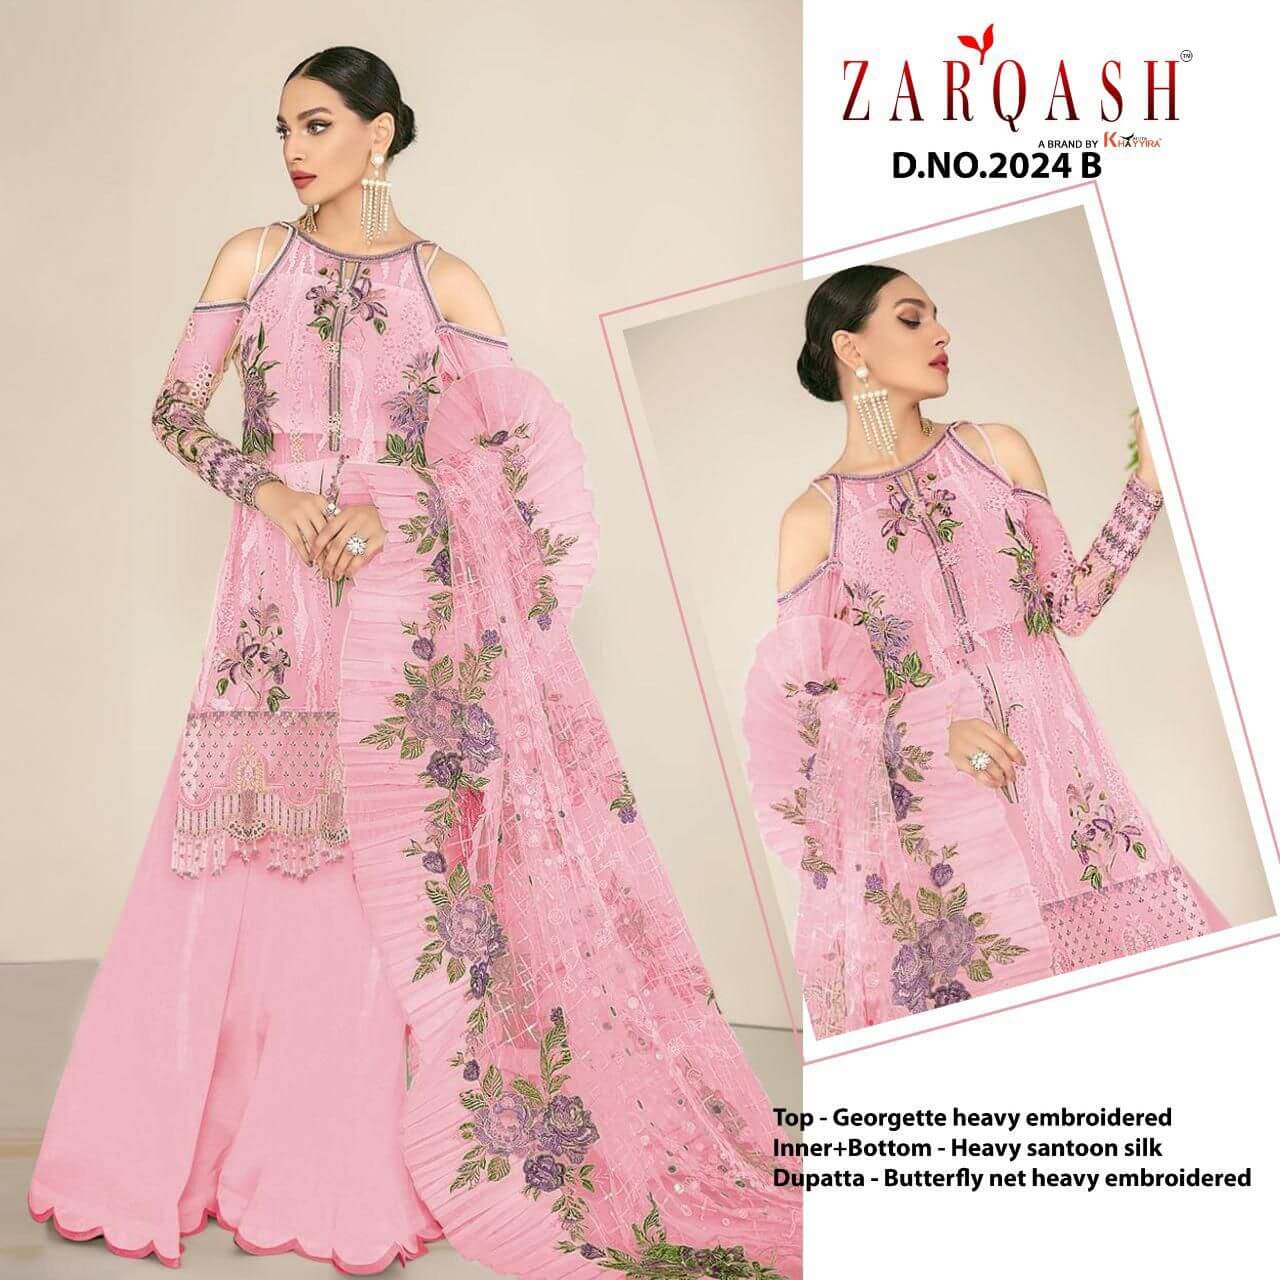 Zarqash Jihan collection 7